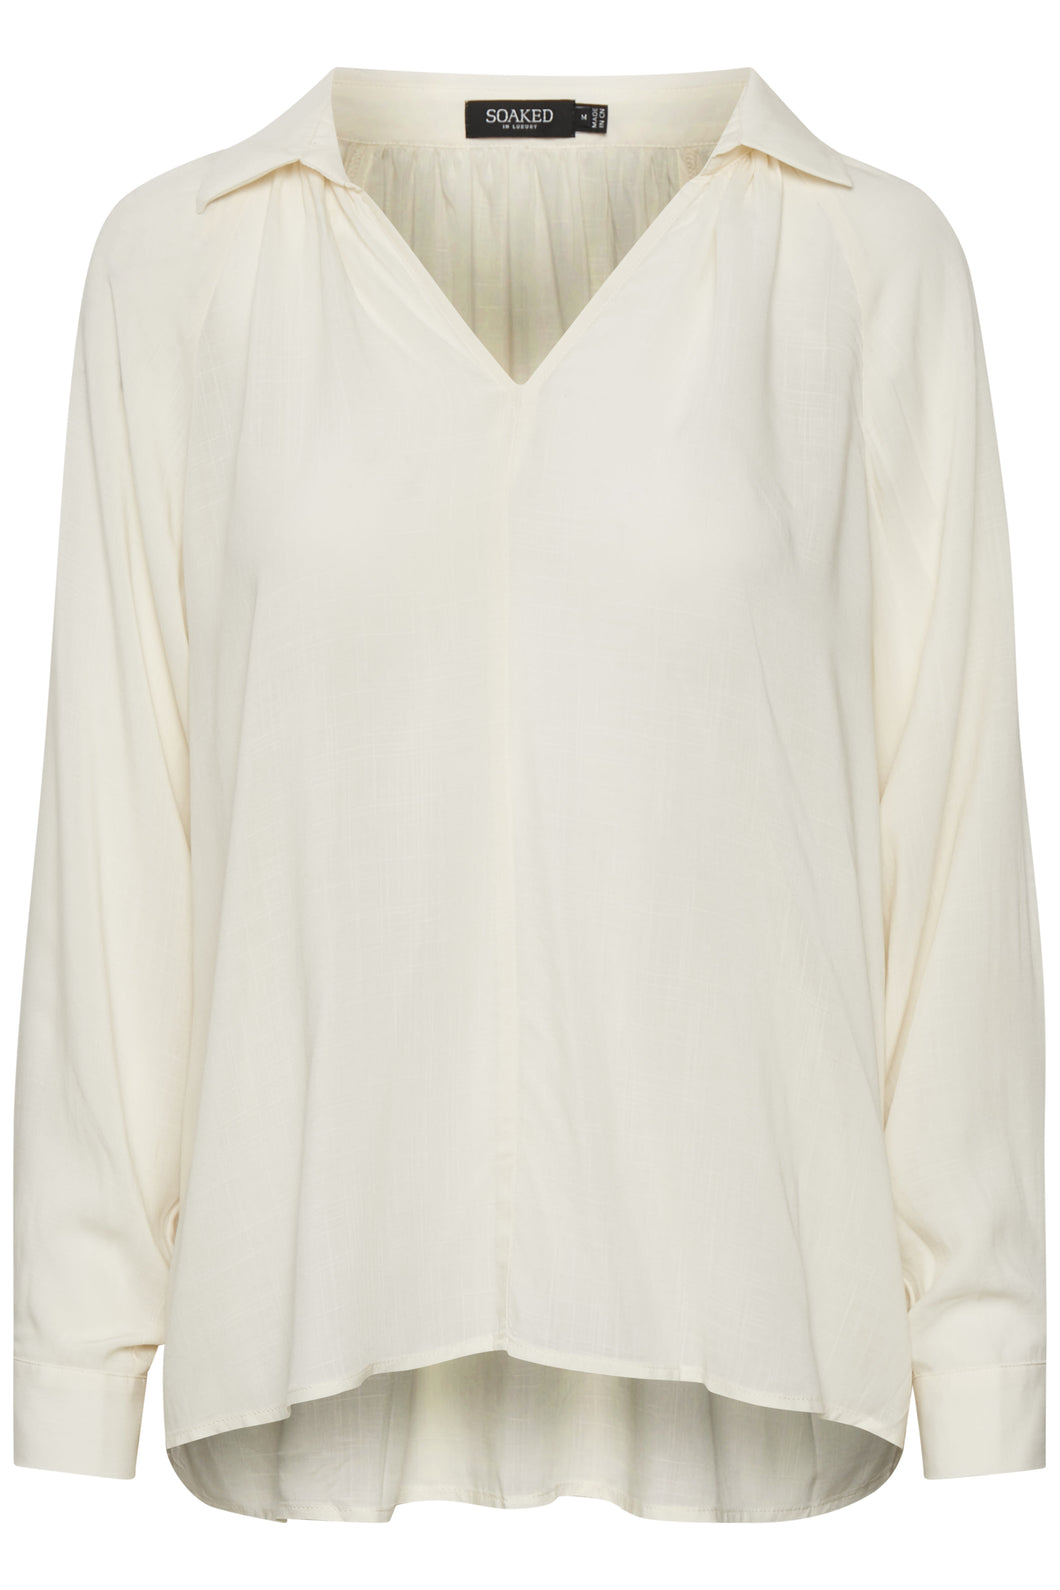 Classic white blouse 